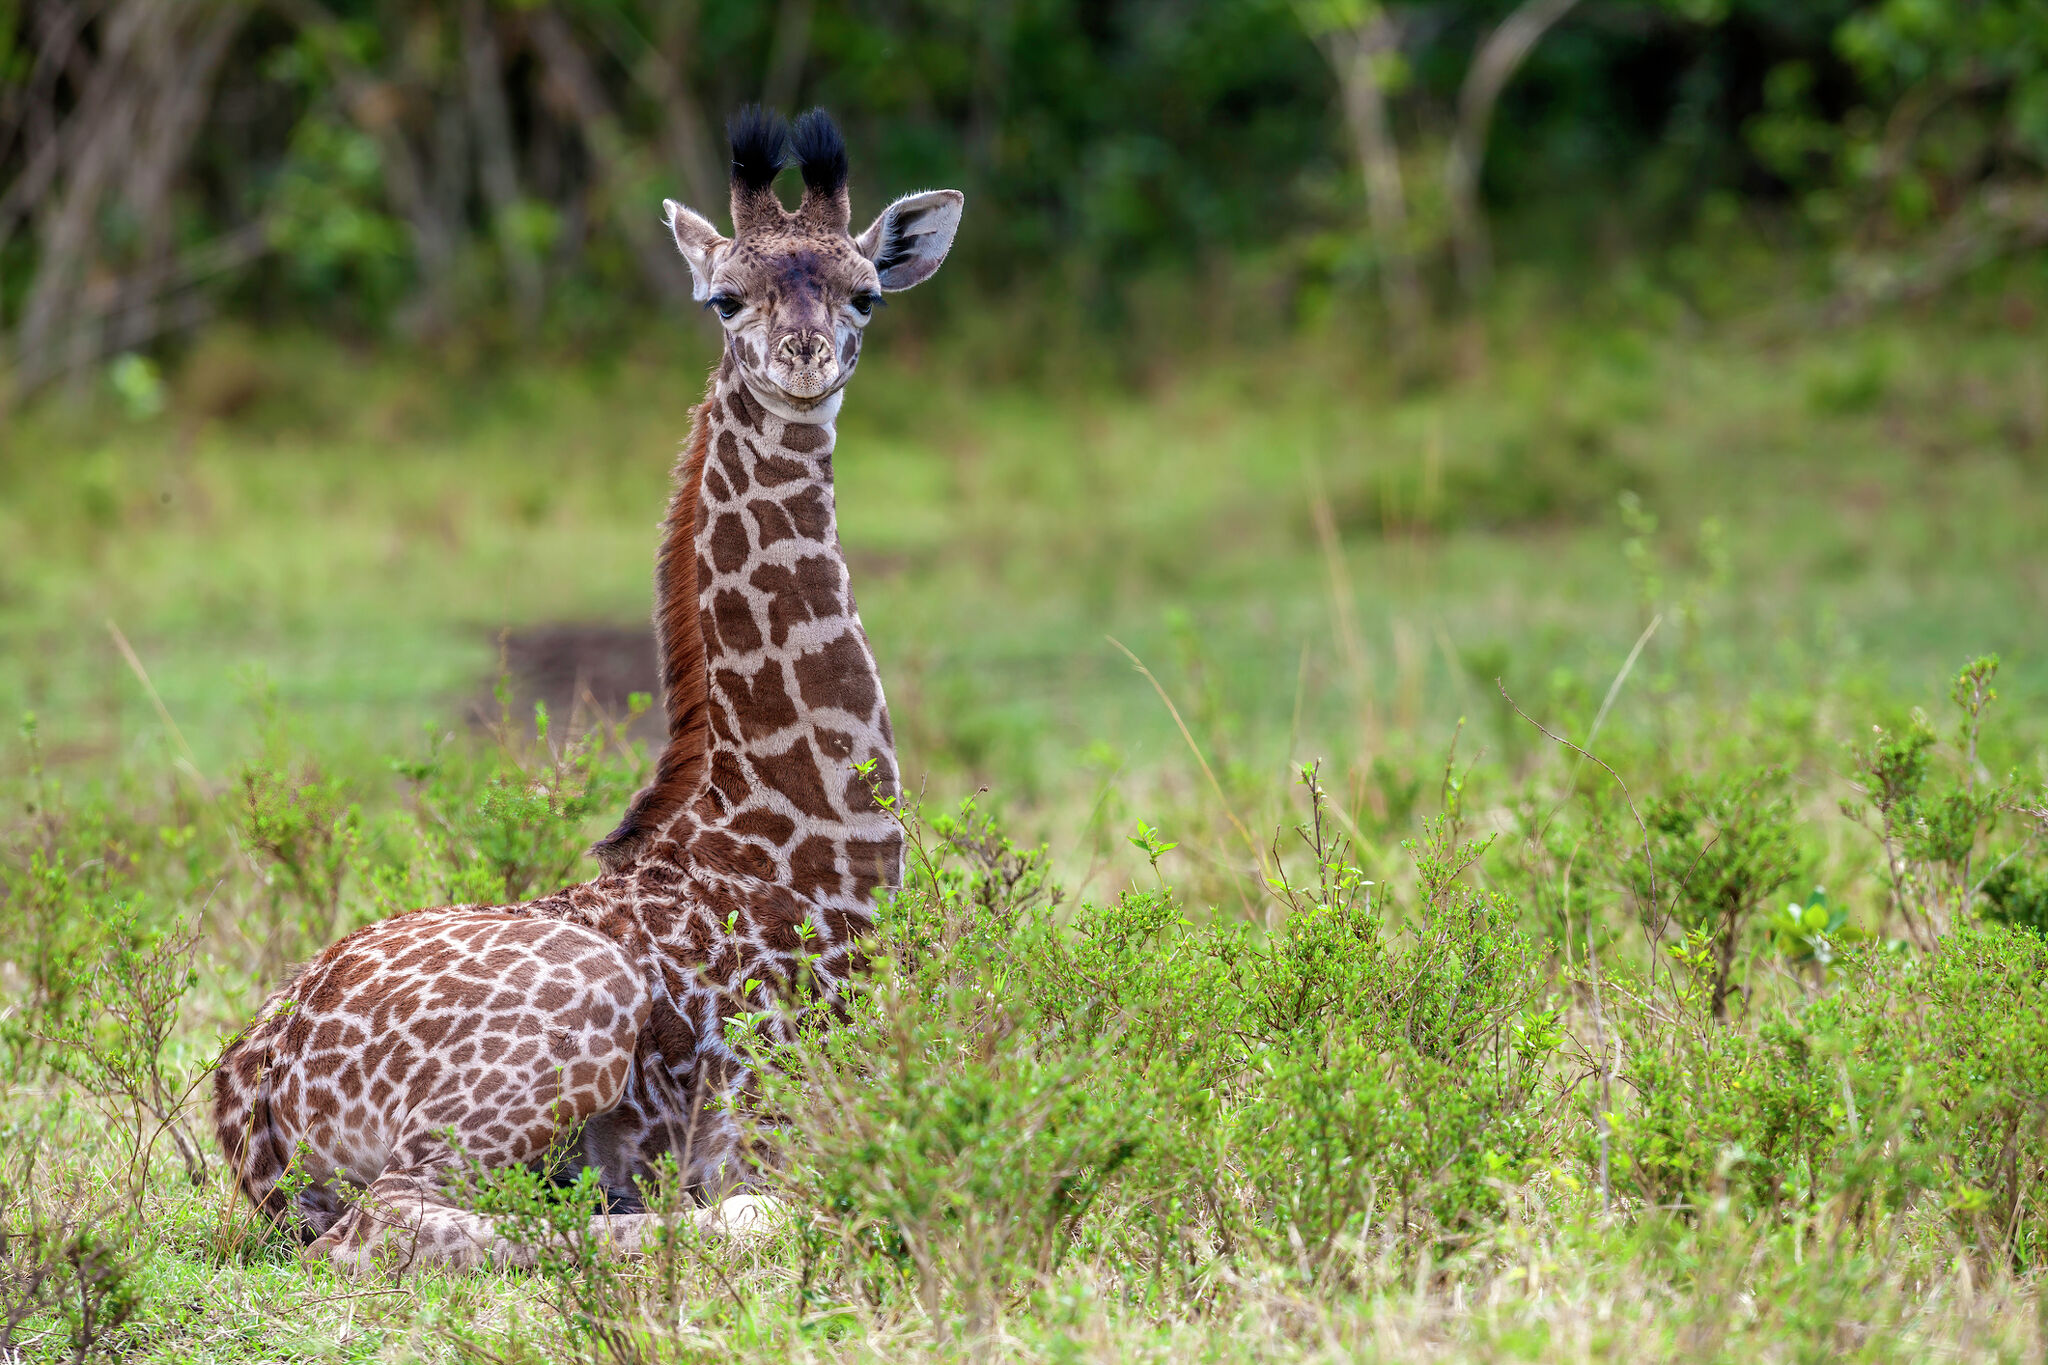 baby giraffe sitting